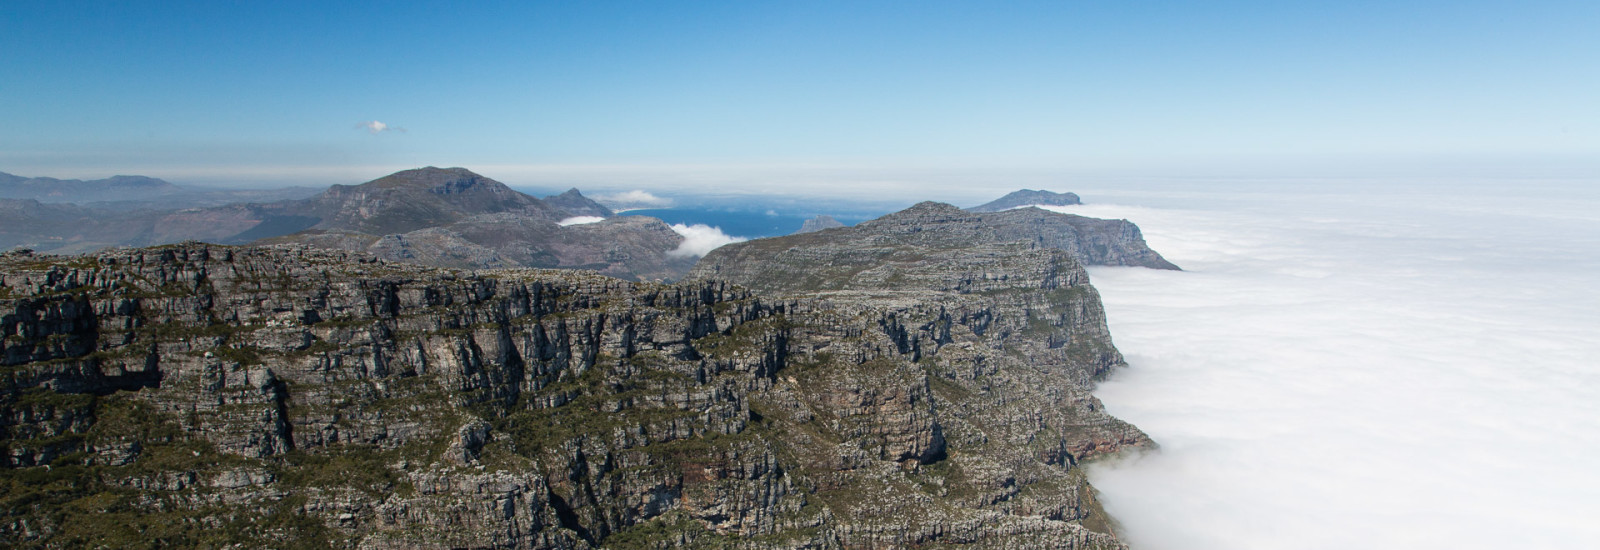 28.10. Tafelberg - Blick Richtung Westen